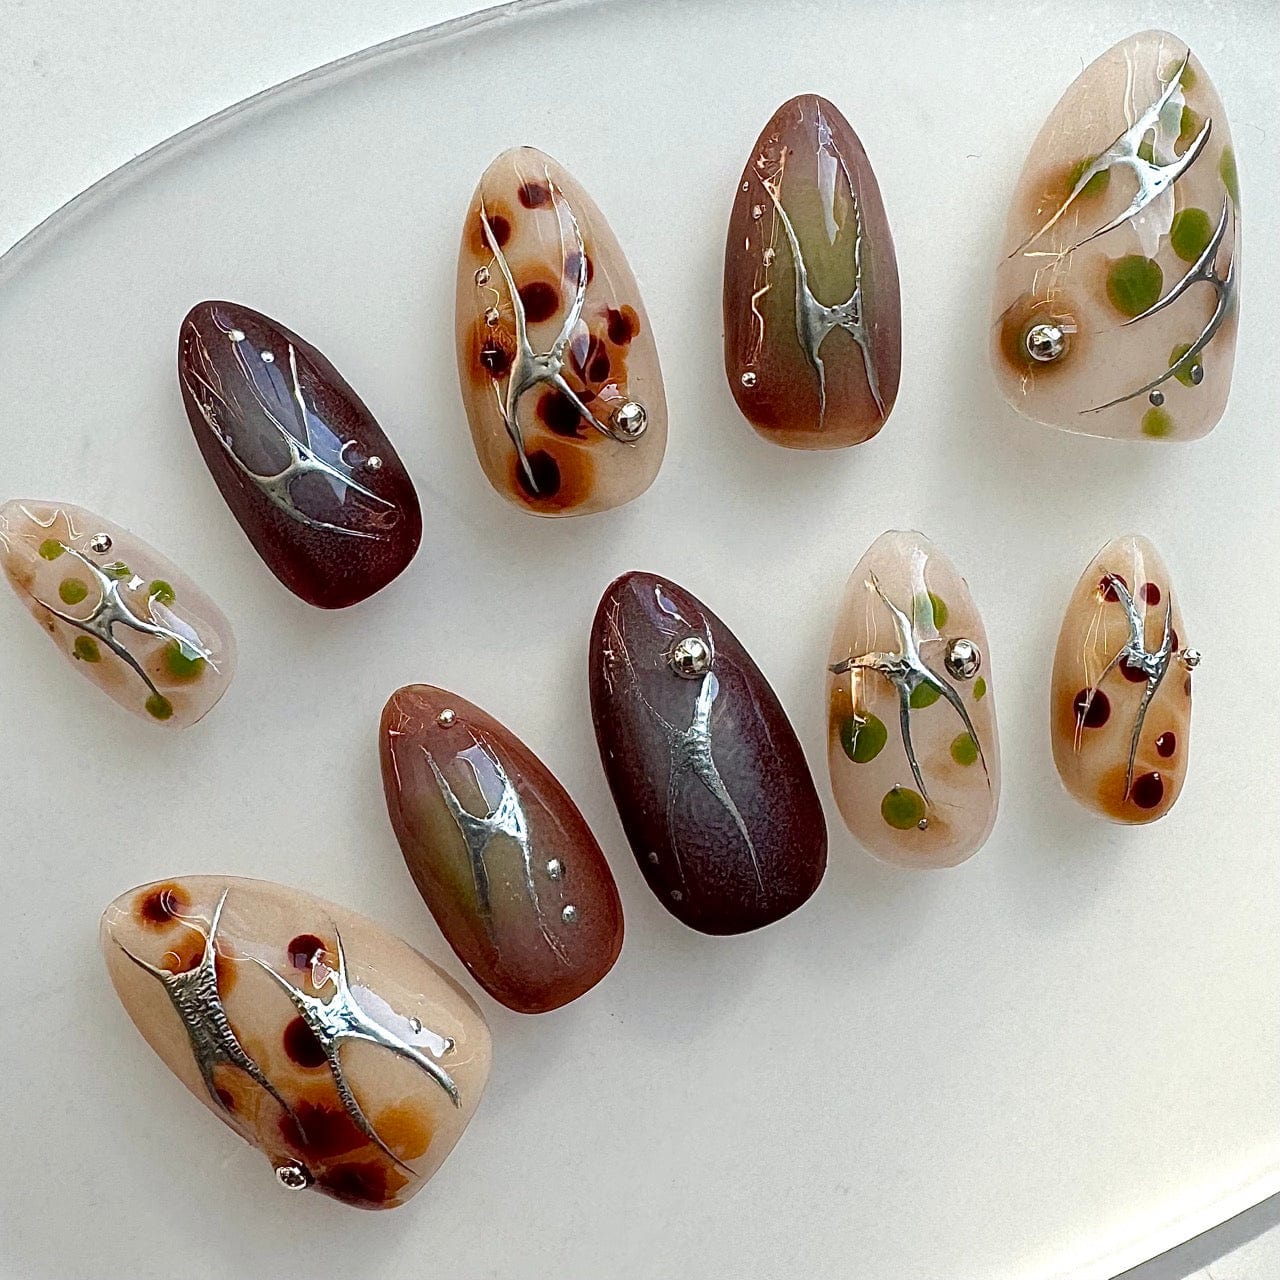 Short almond nails press-on set showcasing mesmerizing ombre nail art designs